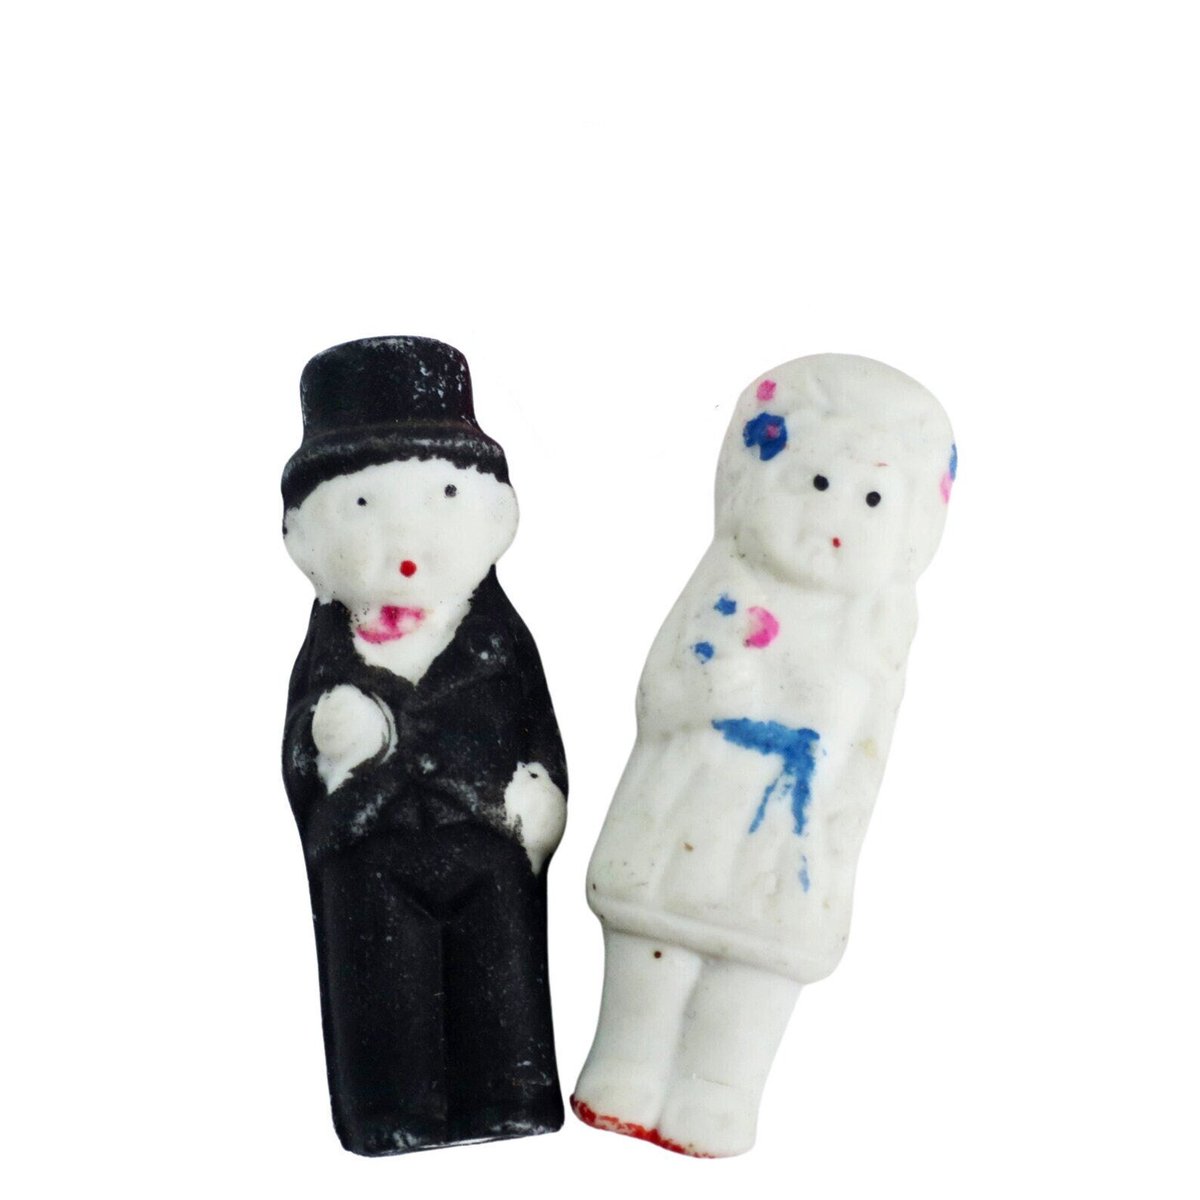 Bisque Bride and Groom Dolls, Frozen Charlotte Couple made in Japan c. 1930s tuppu.net/83f8937 #SMILEtt23 #EtsyteamUnity #Vintage4Sale #SwirlingO11